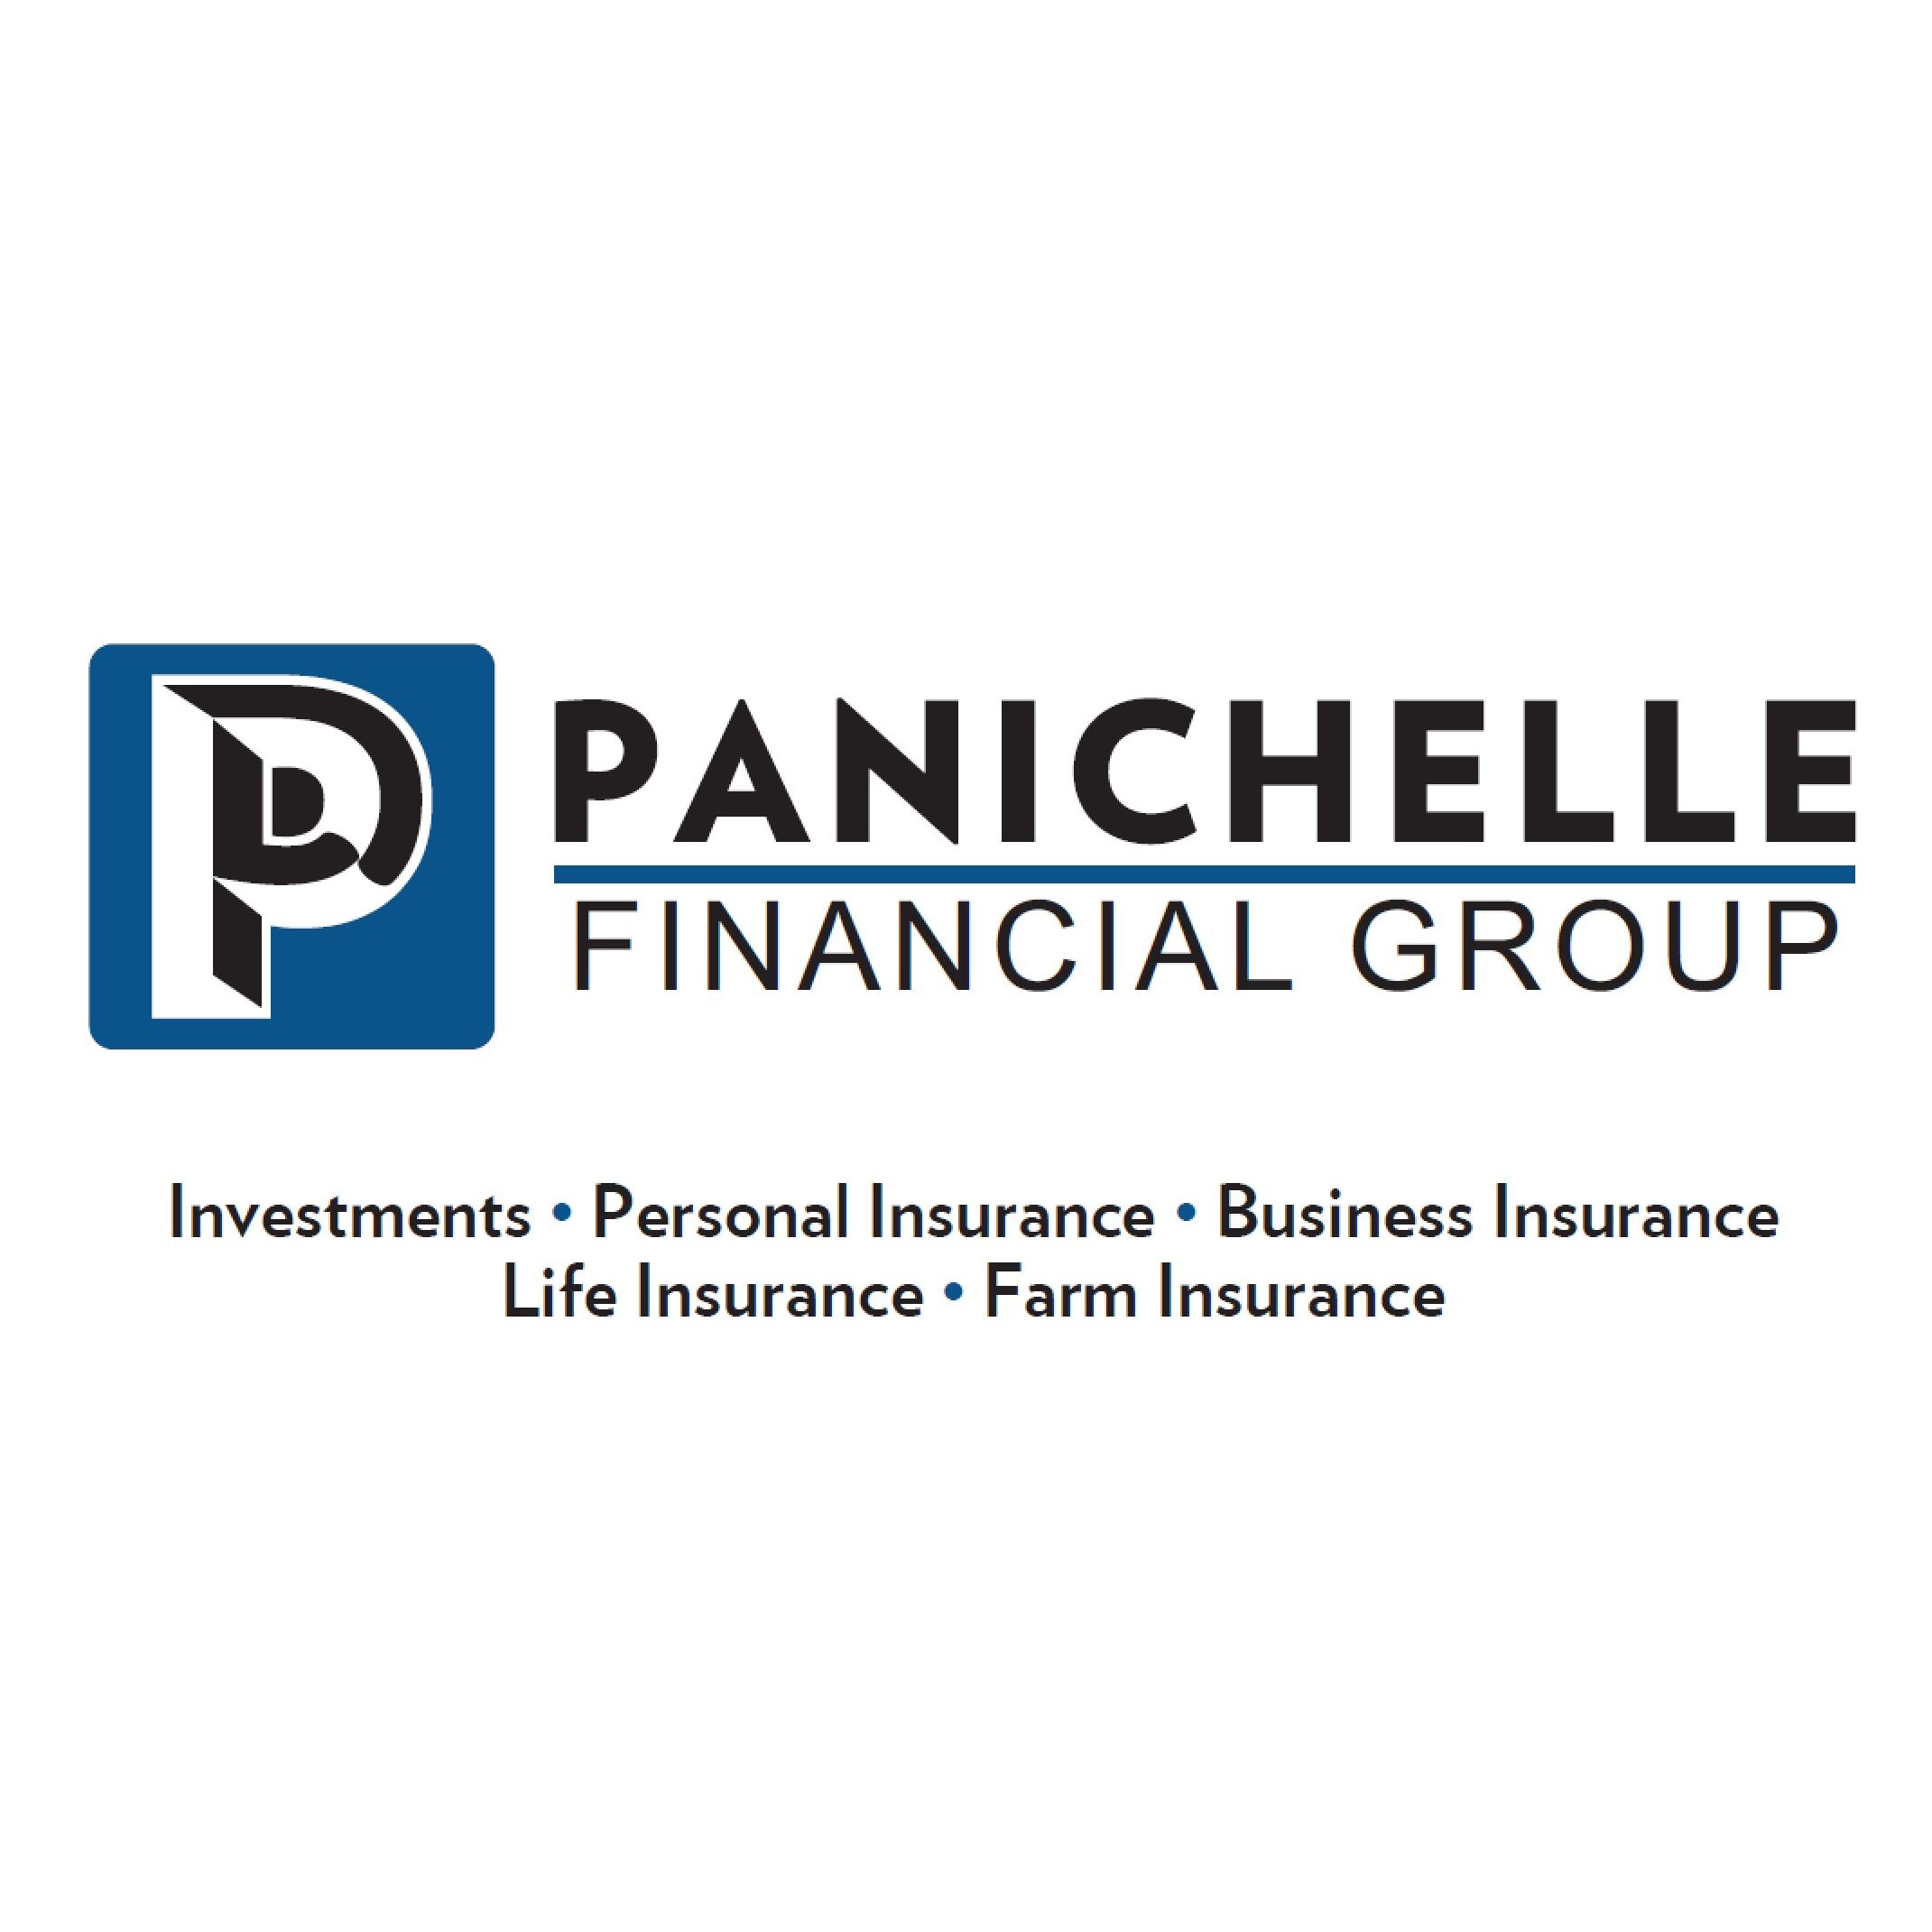 Ronald M Panichelle, Insurance Agent